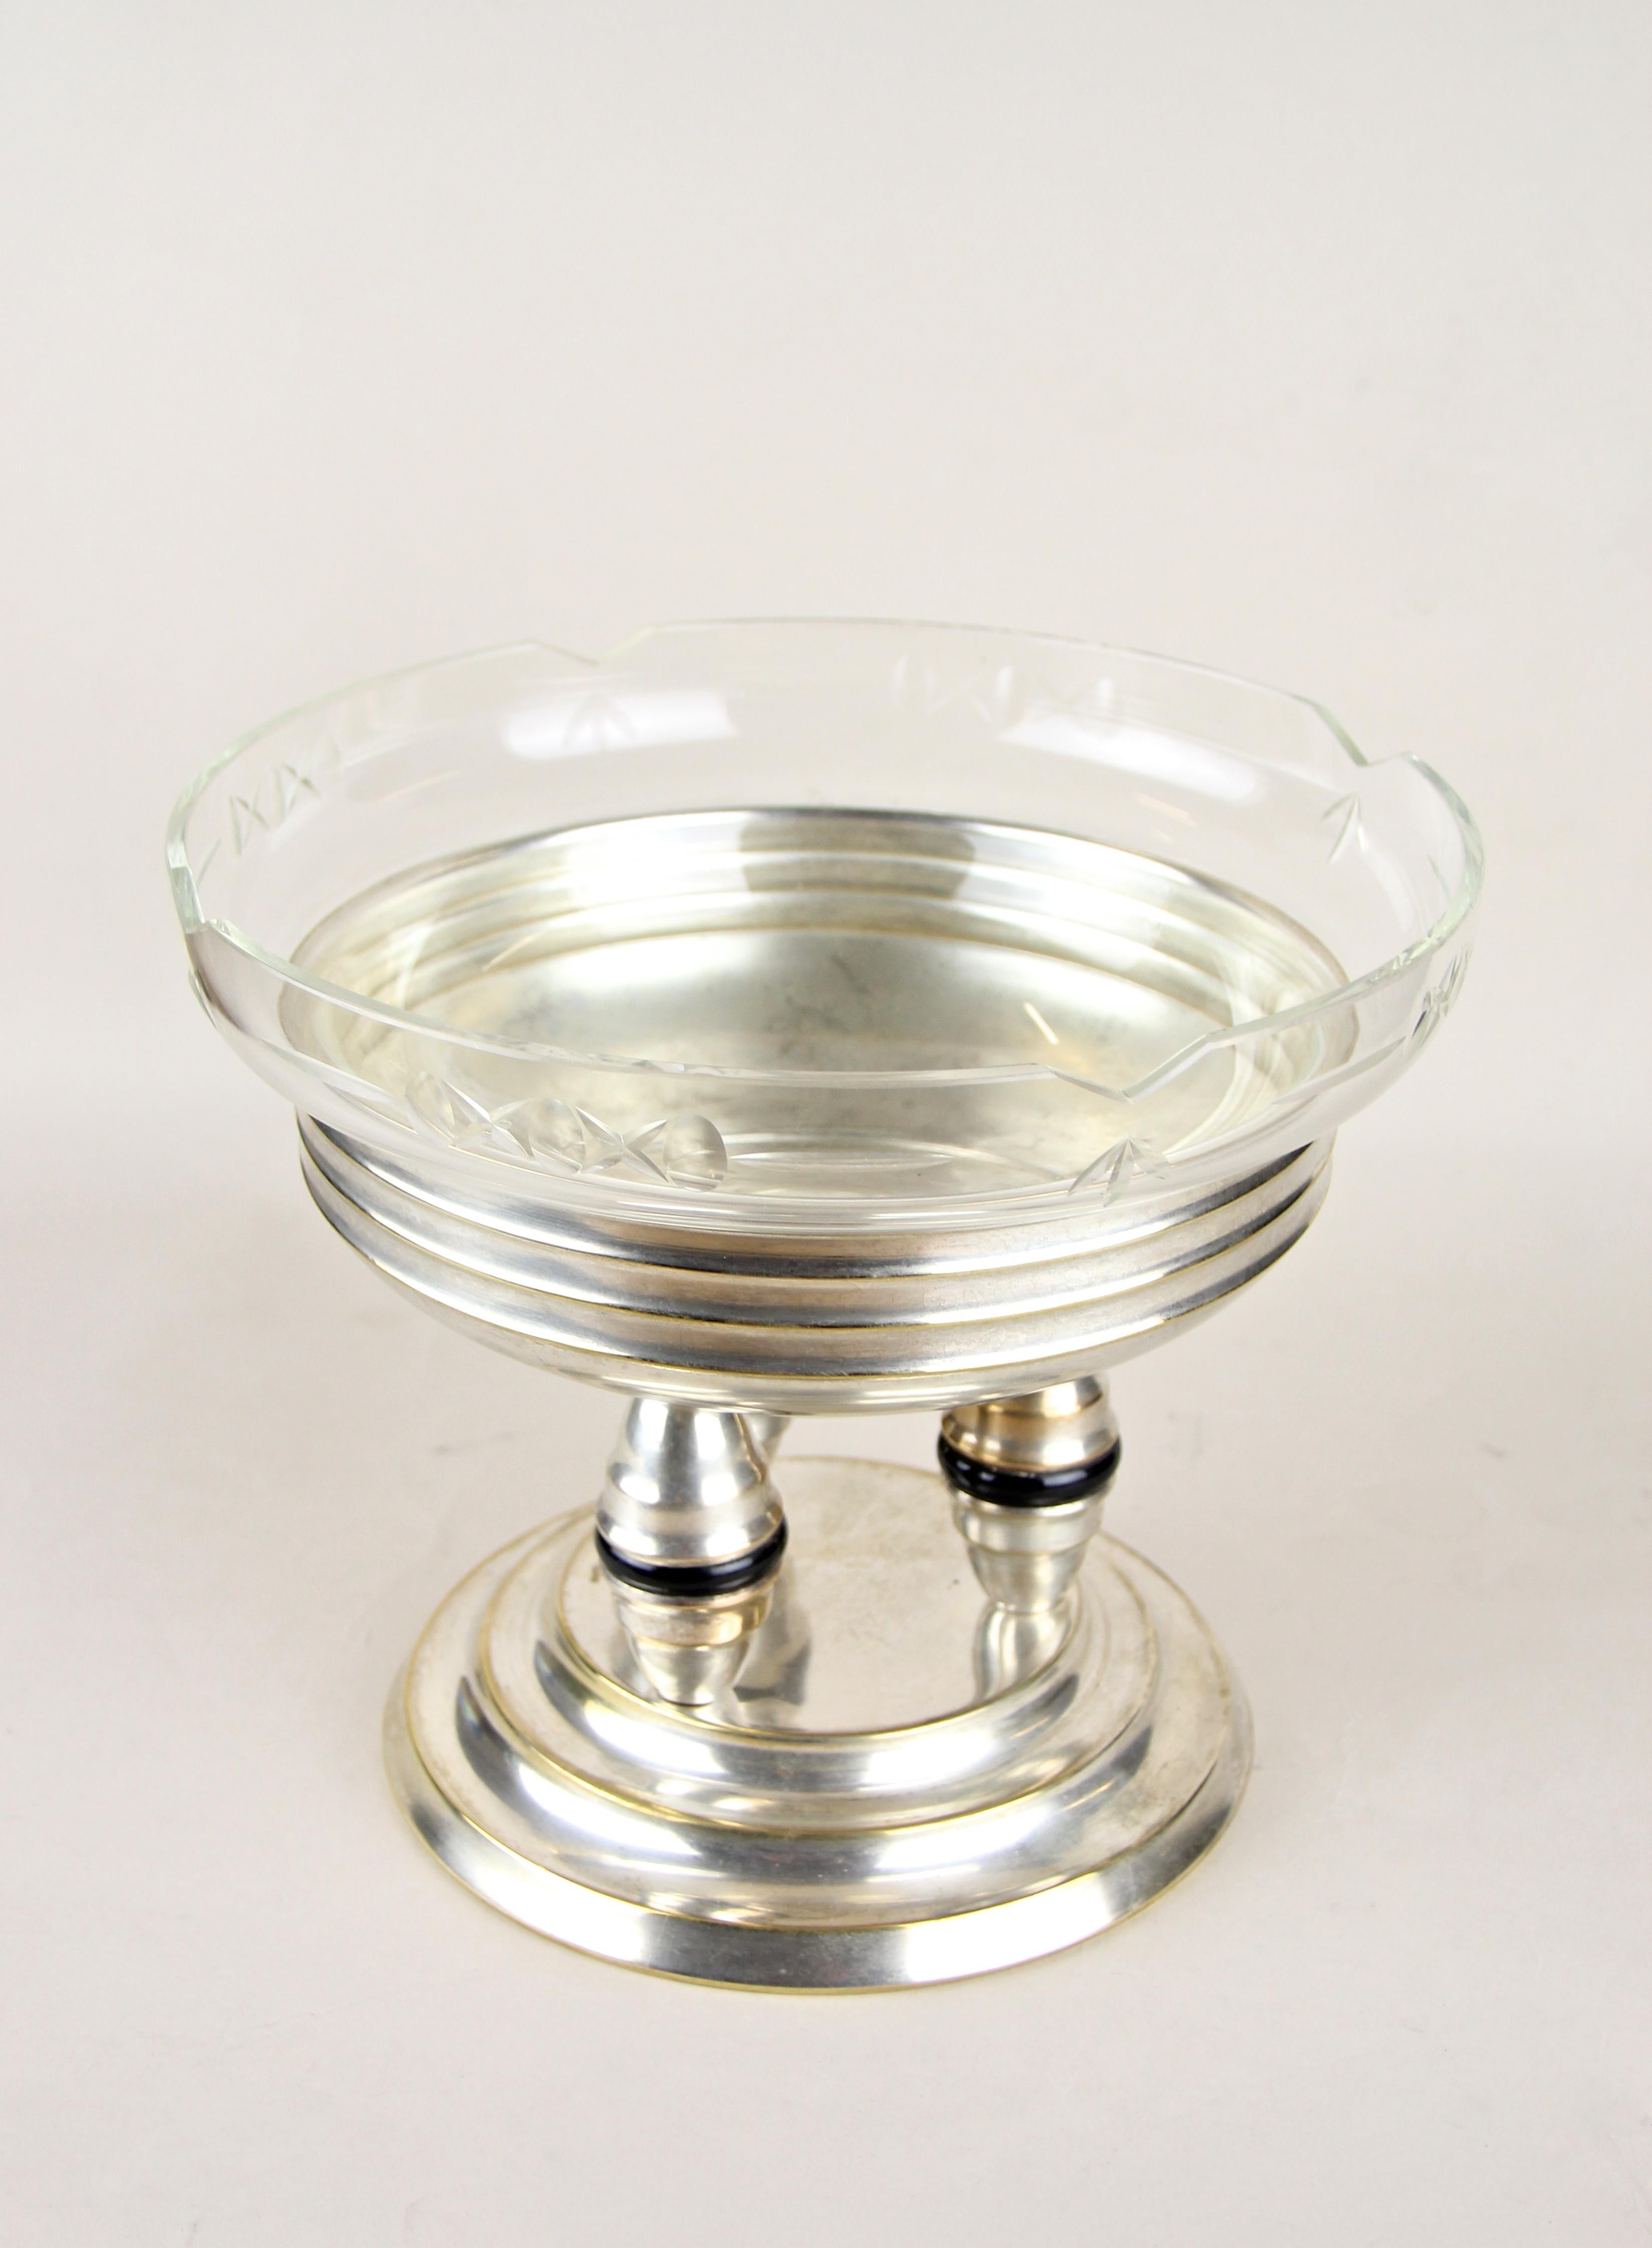 20th Century Silvered Glass Bowl Centerpiece by Lenk Austria, circa 1920